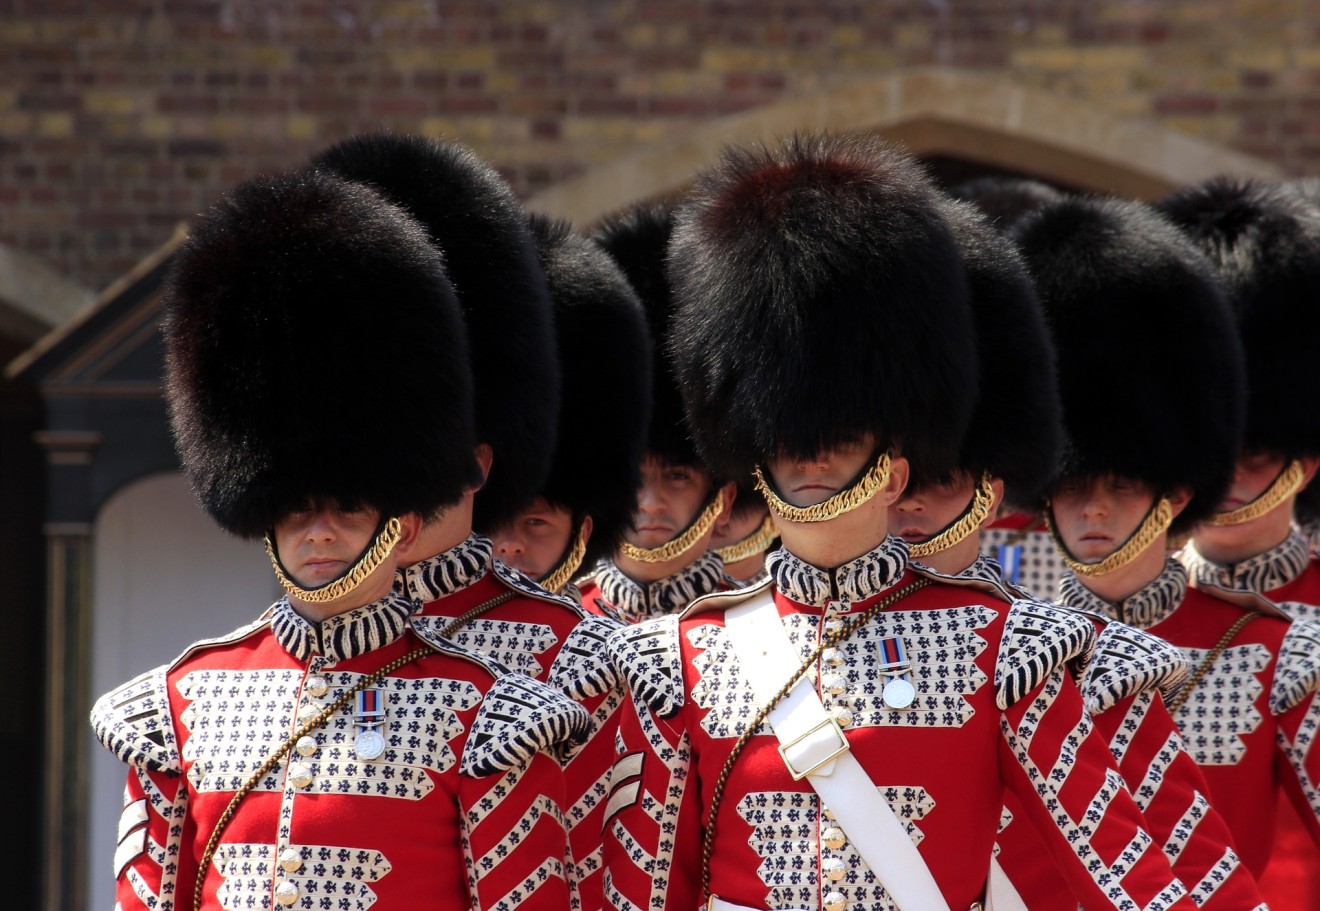 London Royal Guard